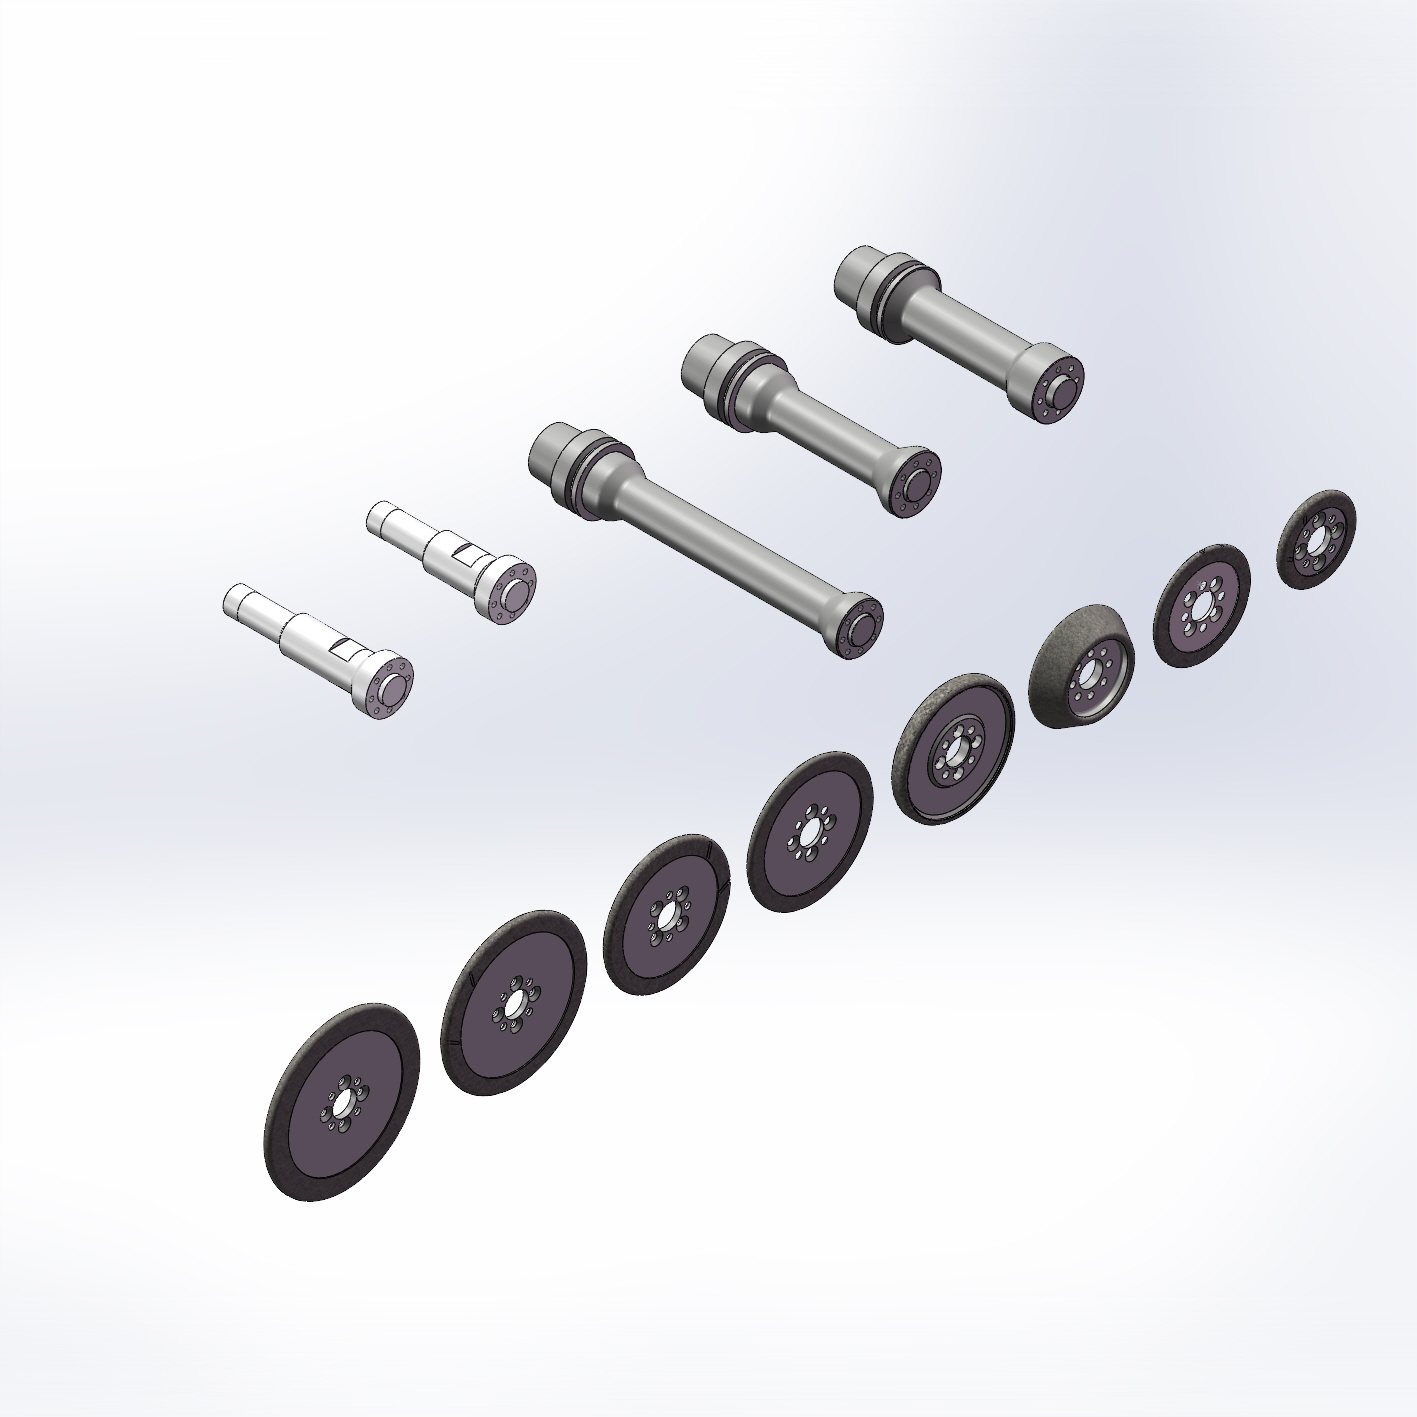 Standard D25 MUZZI fixing – Tool holders and diamond wheels